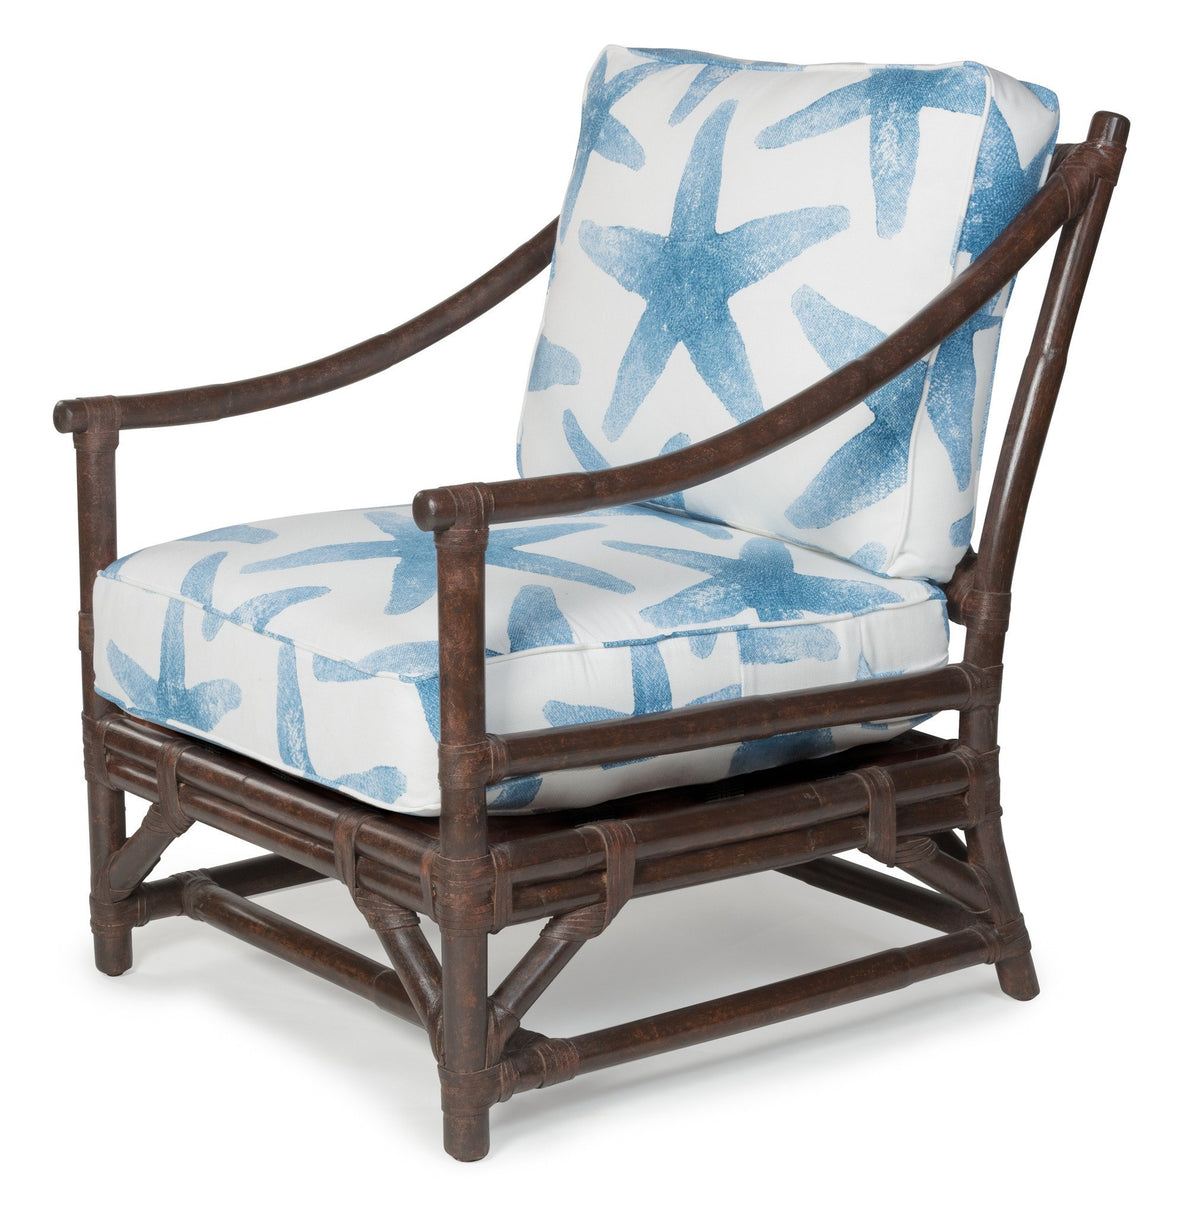 Designer Wicker &amp; Rattan By Tribor Woodland Rattan Arm Chair by Designer Wicker from Tribor Chair - Rattan Imports